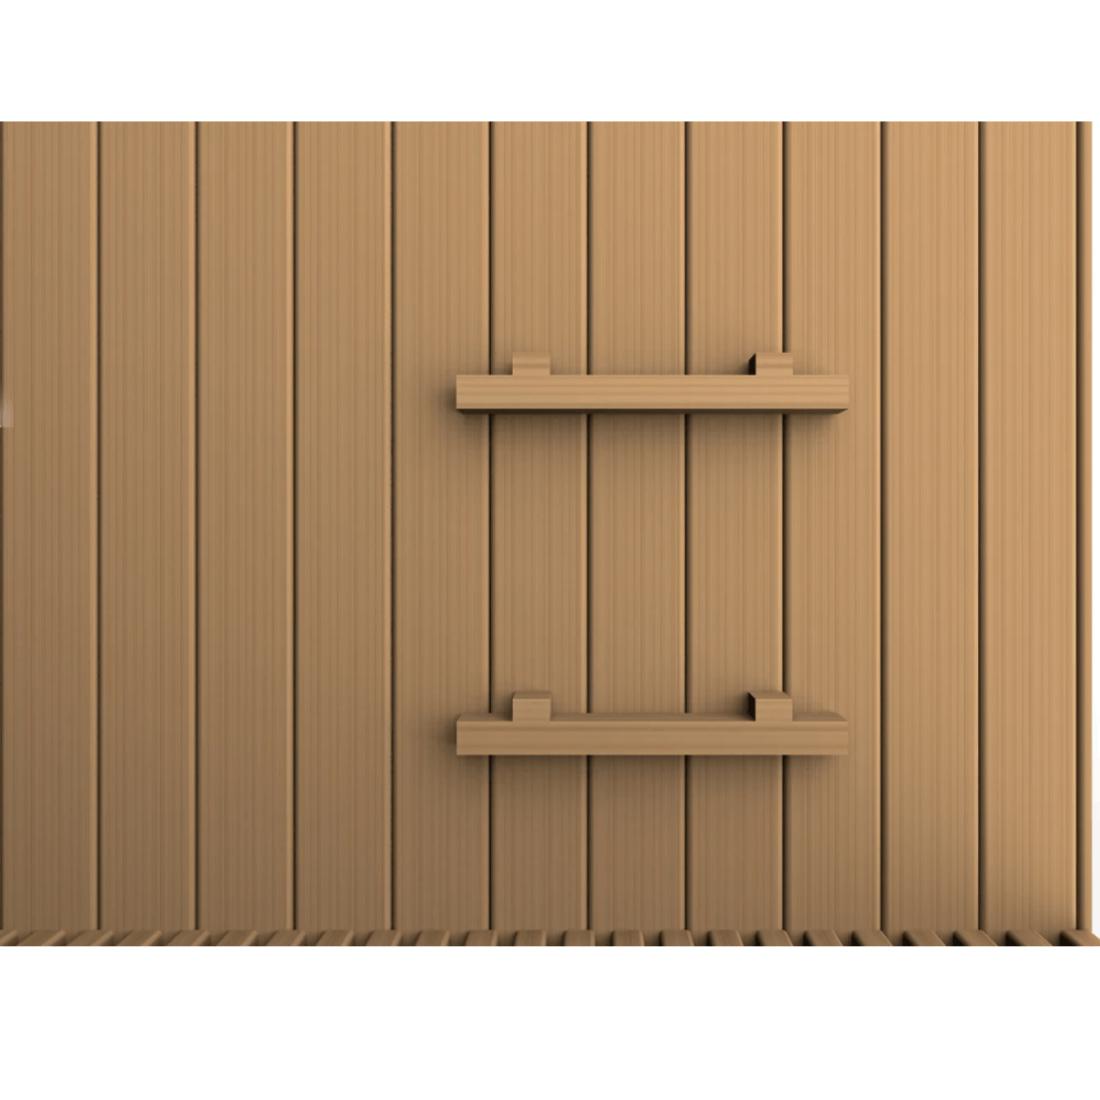 Golden Designs "Sundsvall Edition" 2-Person Traditional Steam Sauna - Canadian Red Cedar, GDI-7289-01 vertical shelf placement.